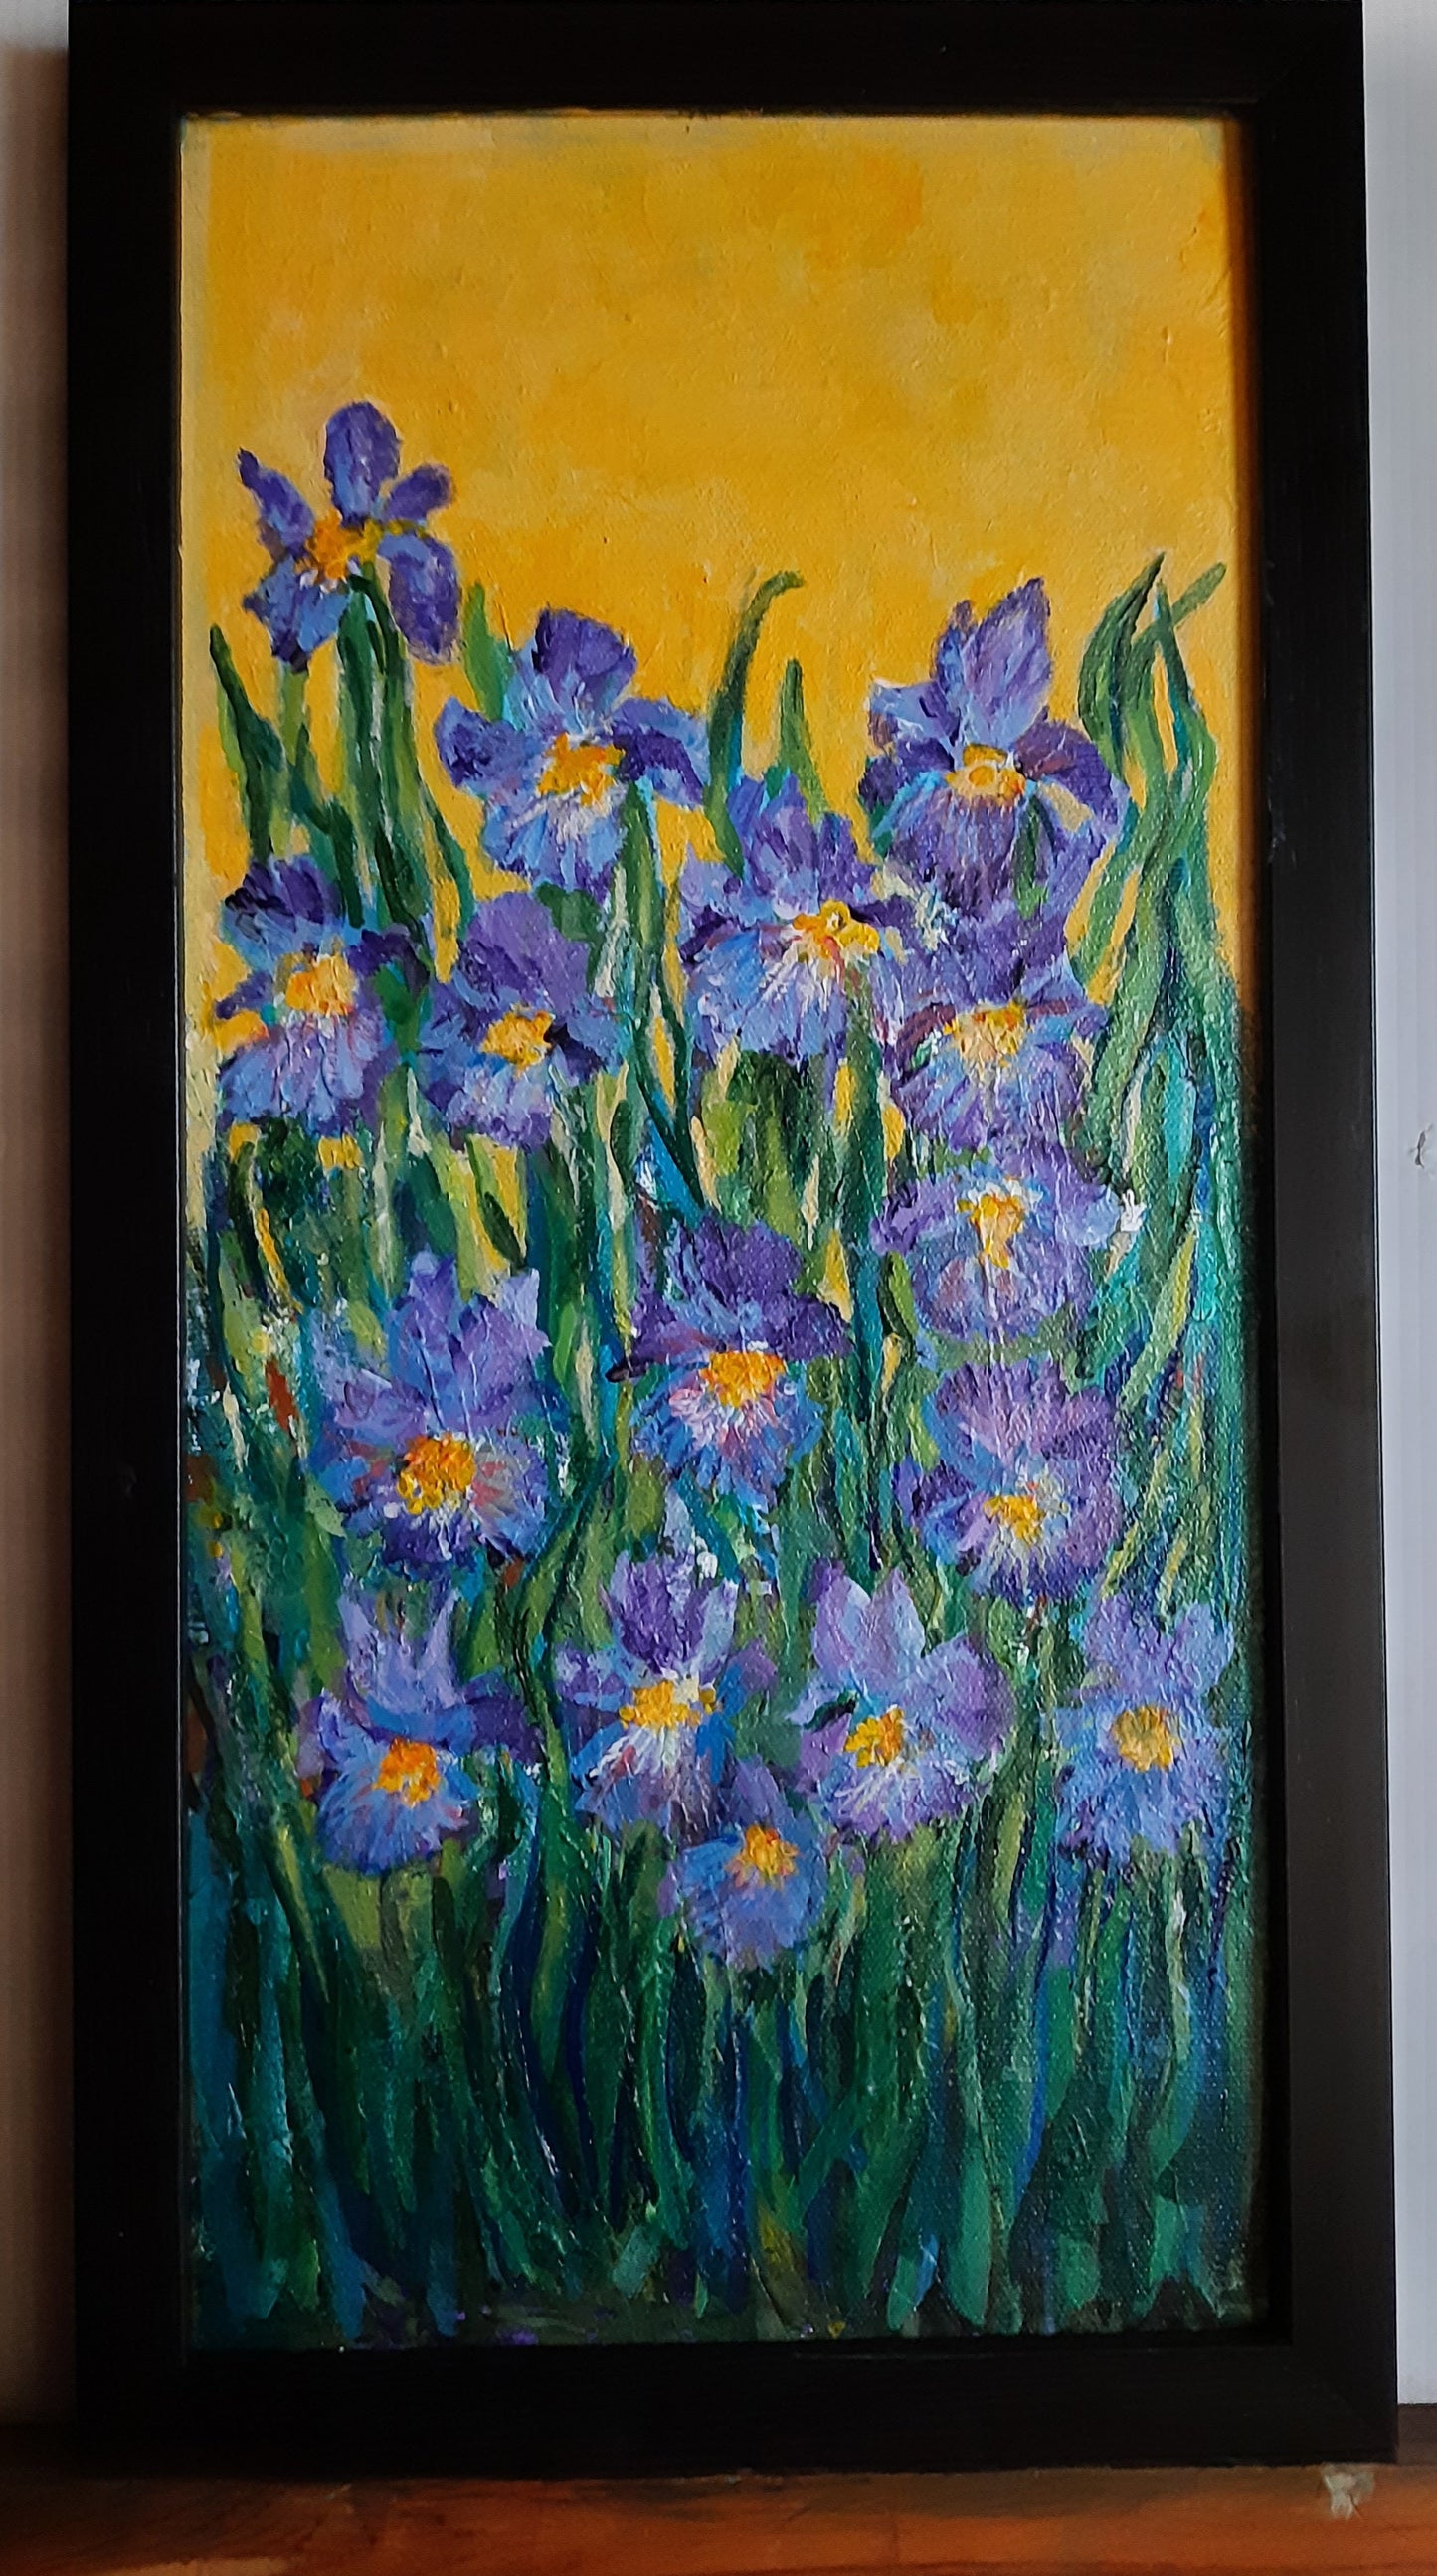 Framed painting of iris